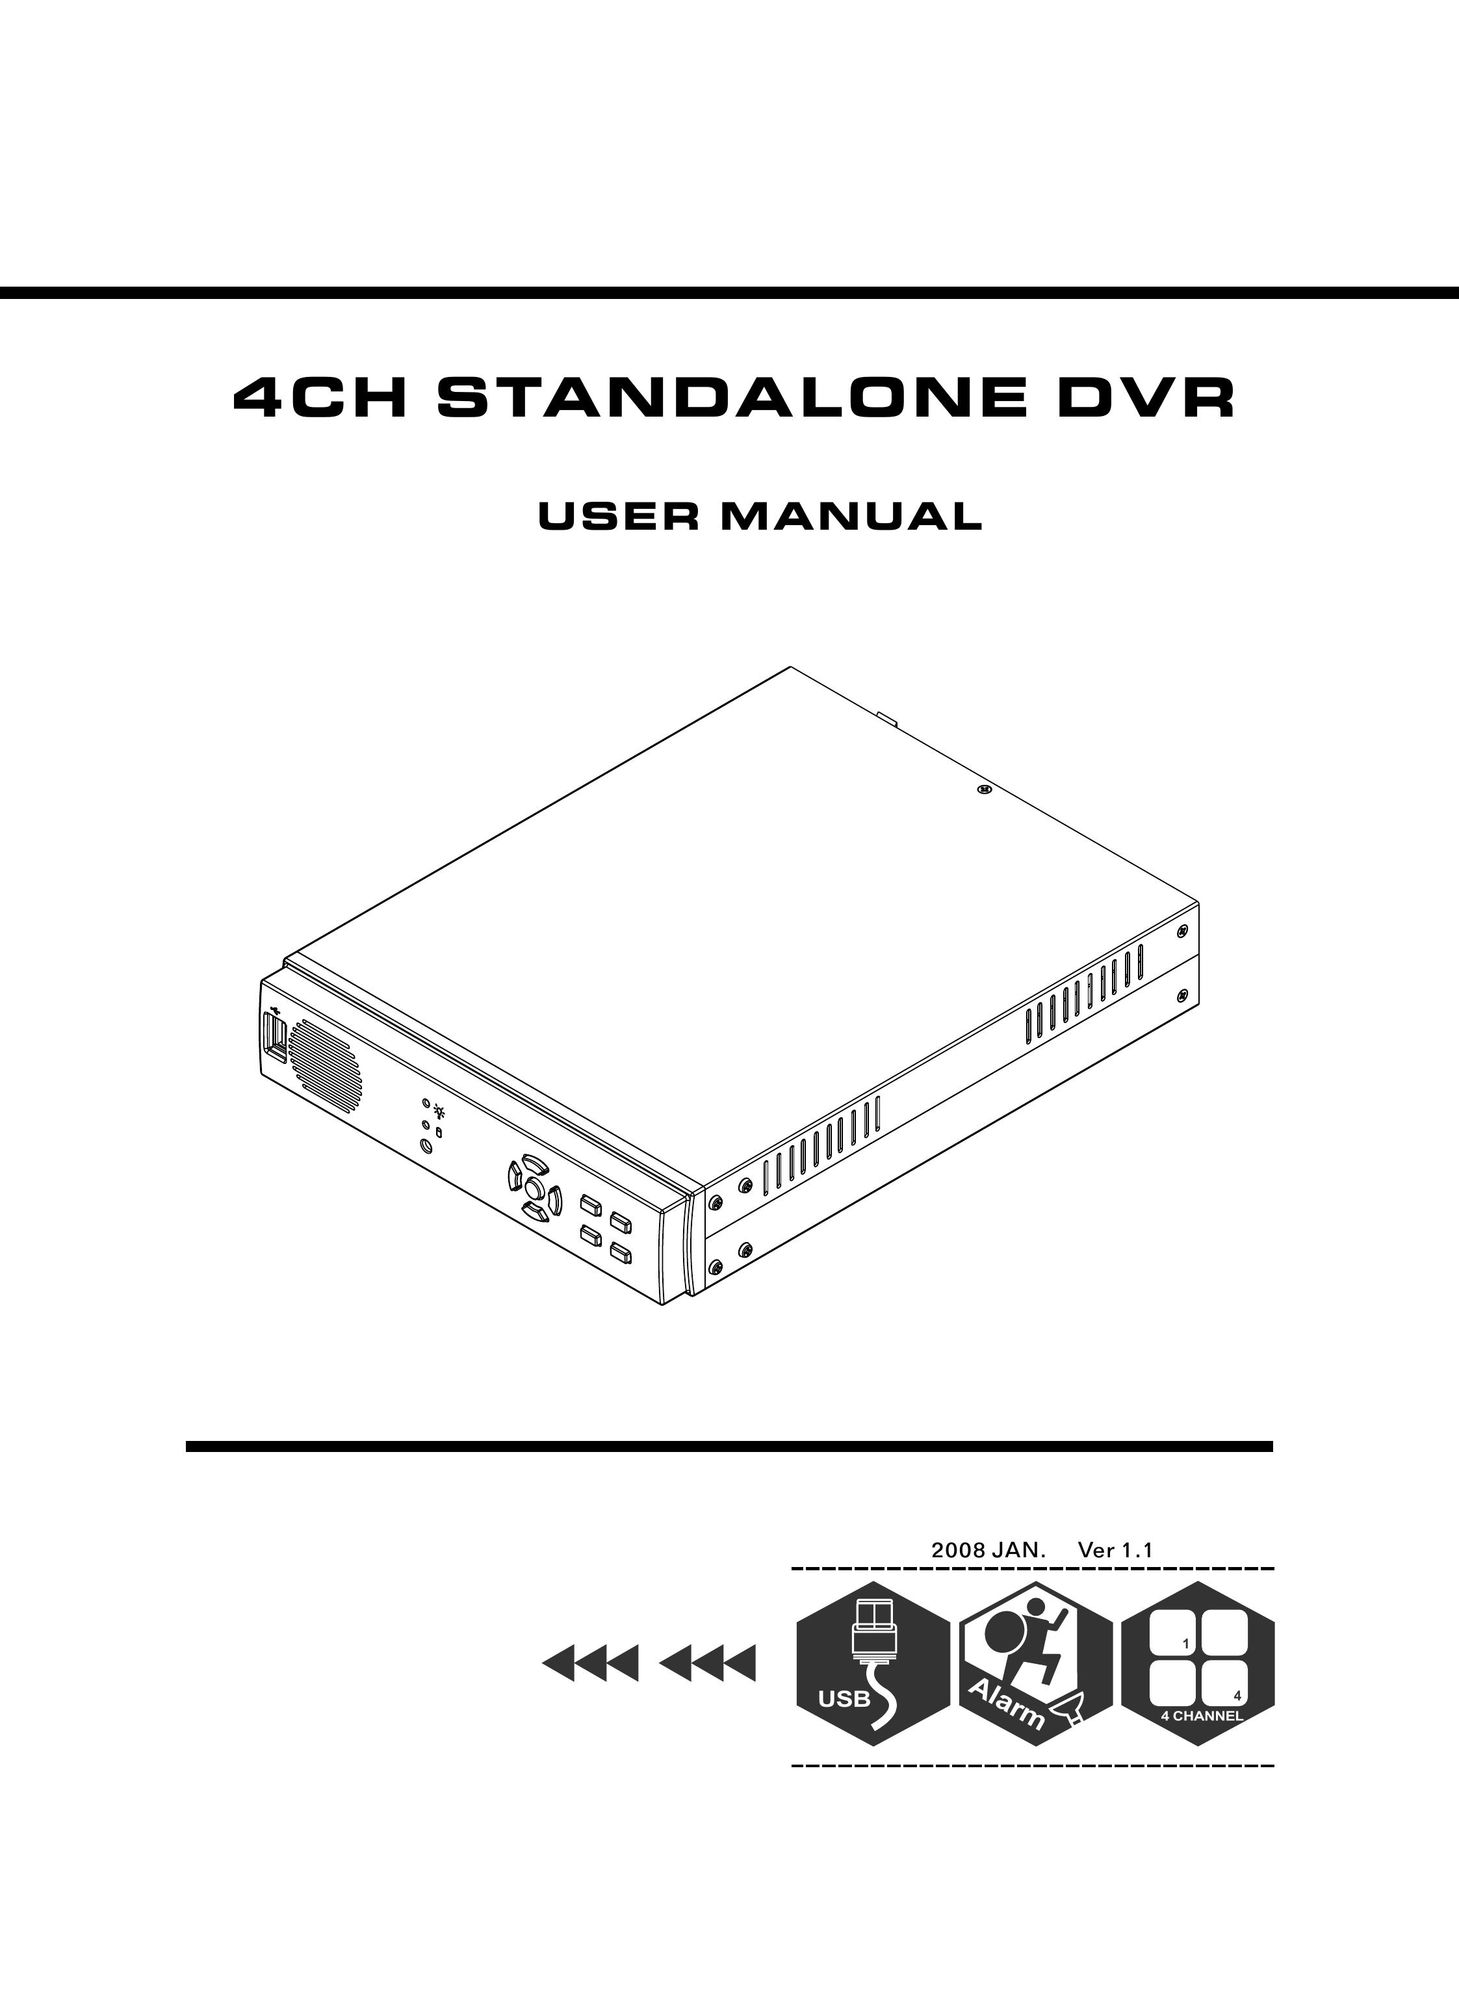 Optiview 4CHs DVR User Manual